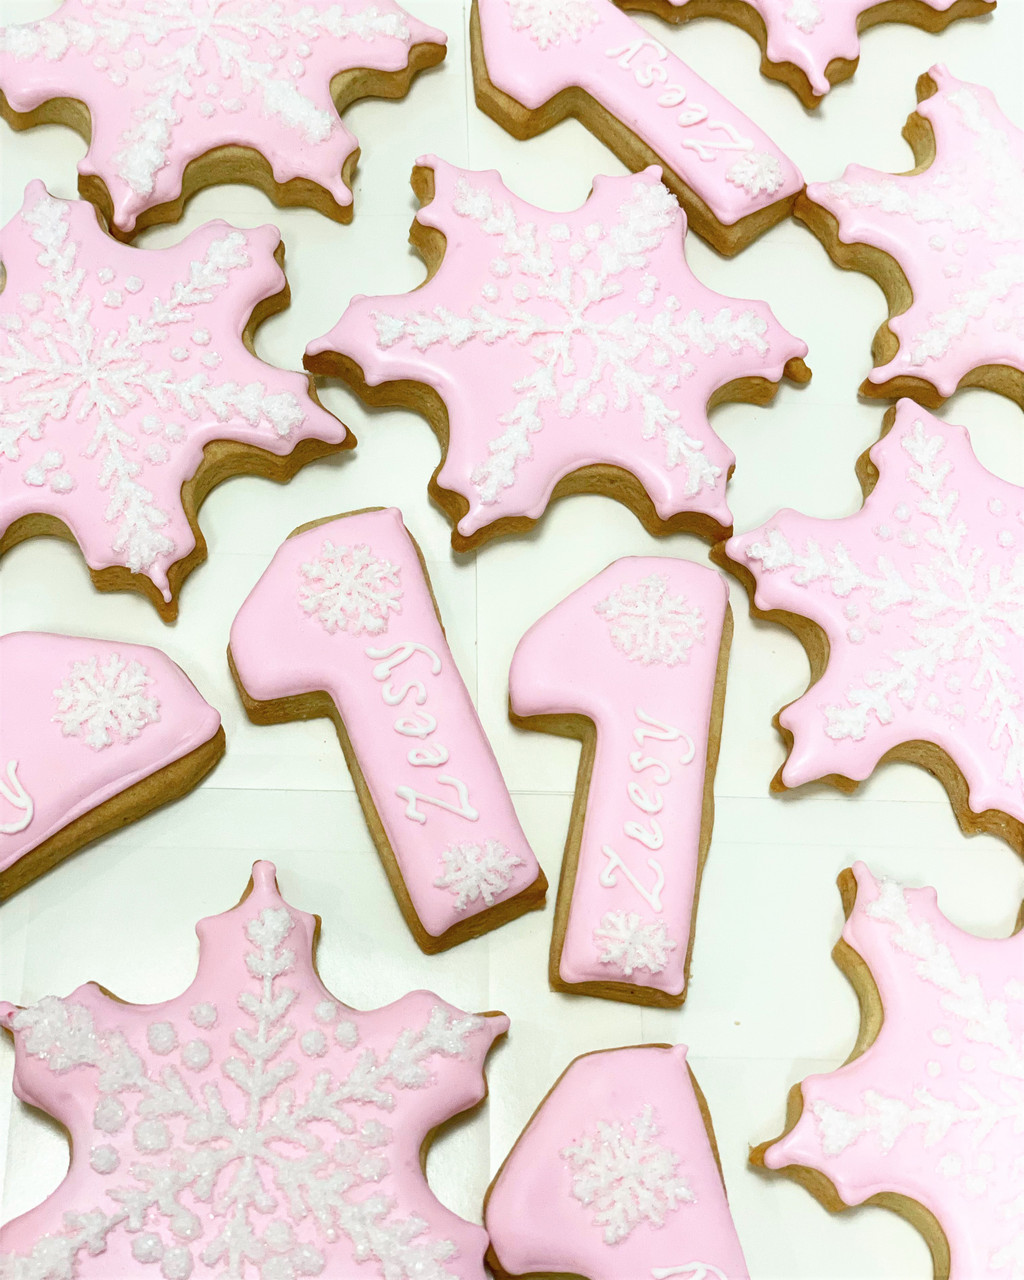 Iced Sugar Cookie Christmas Gift Set - 12 Pack Elegant Desserts